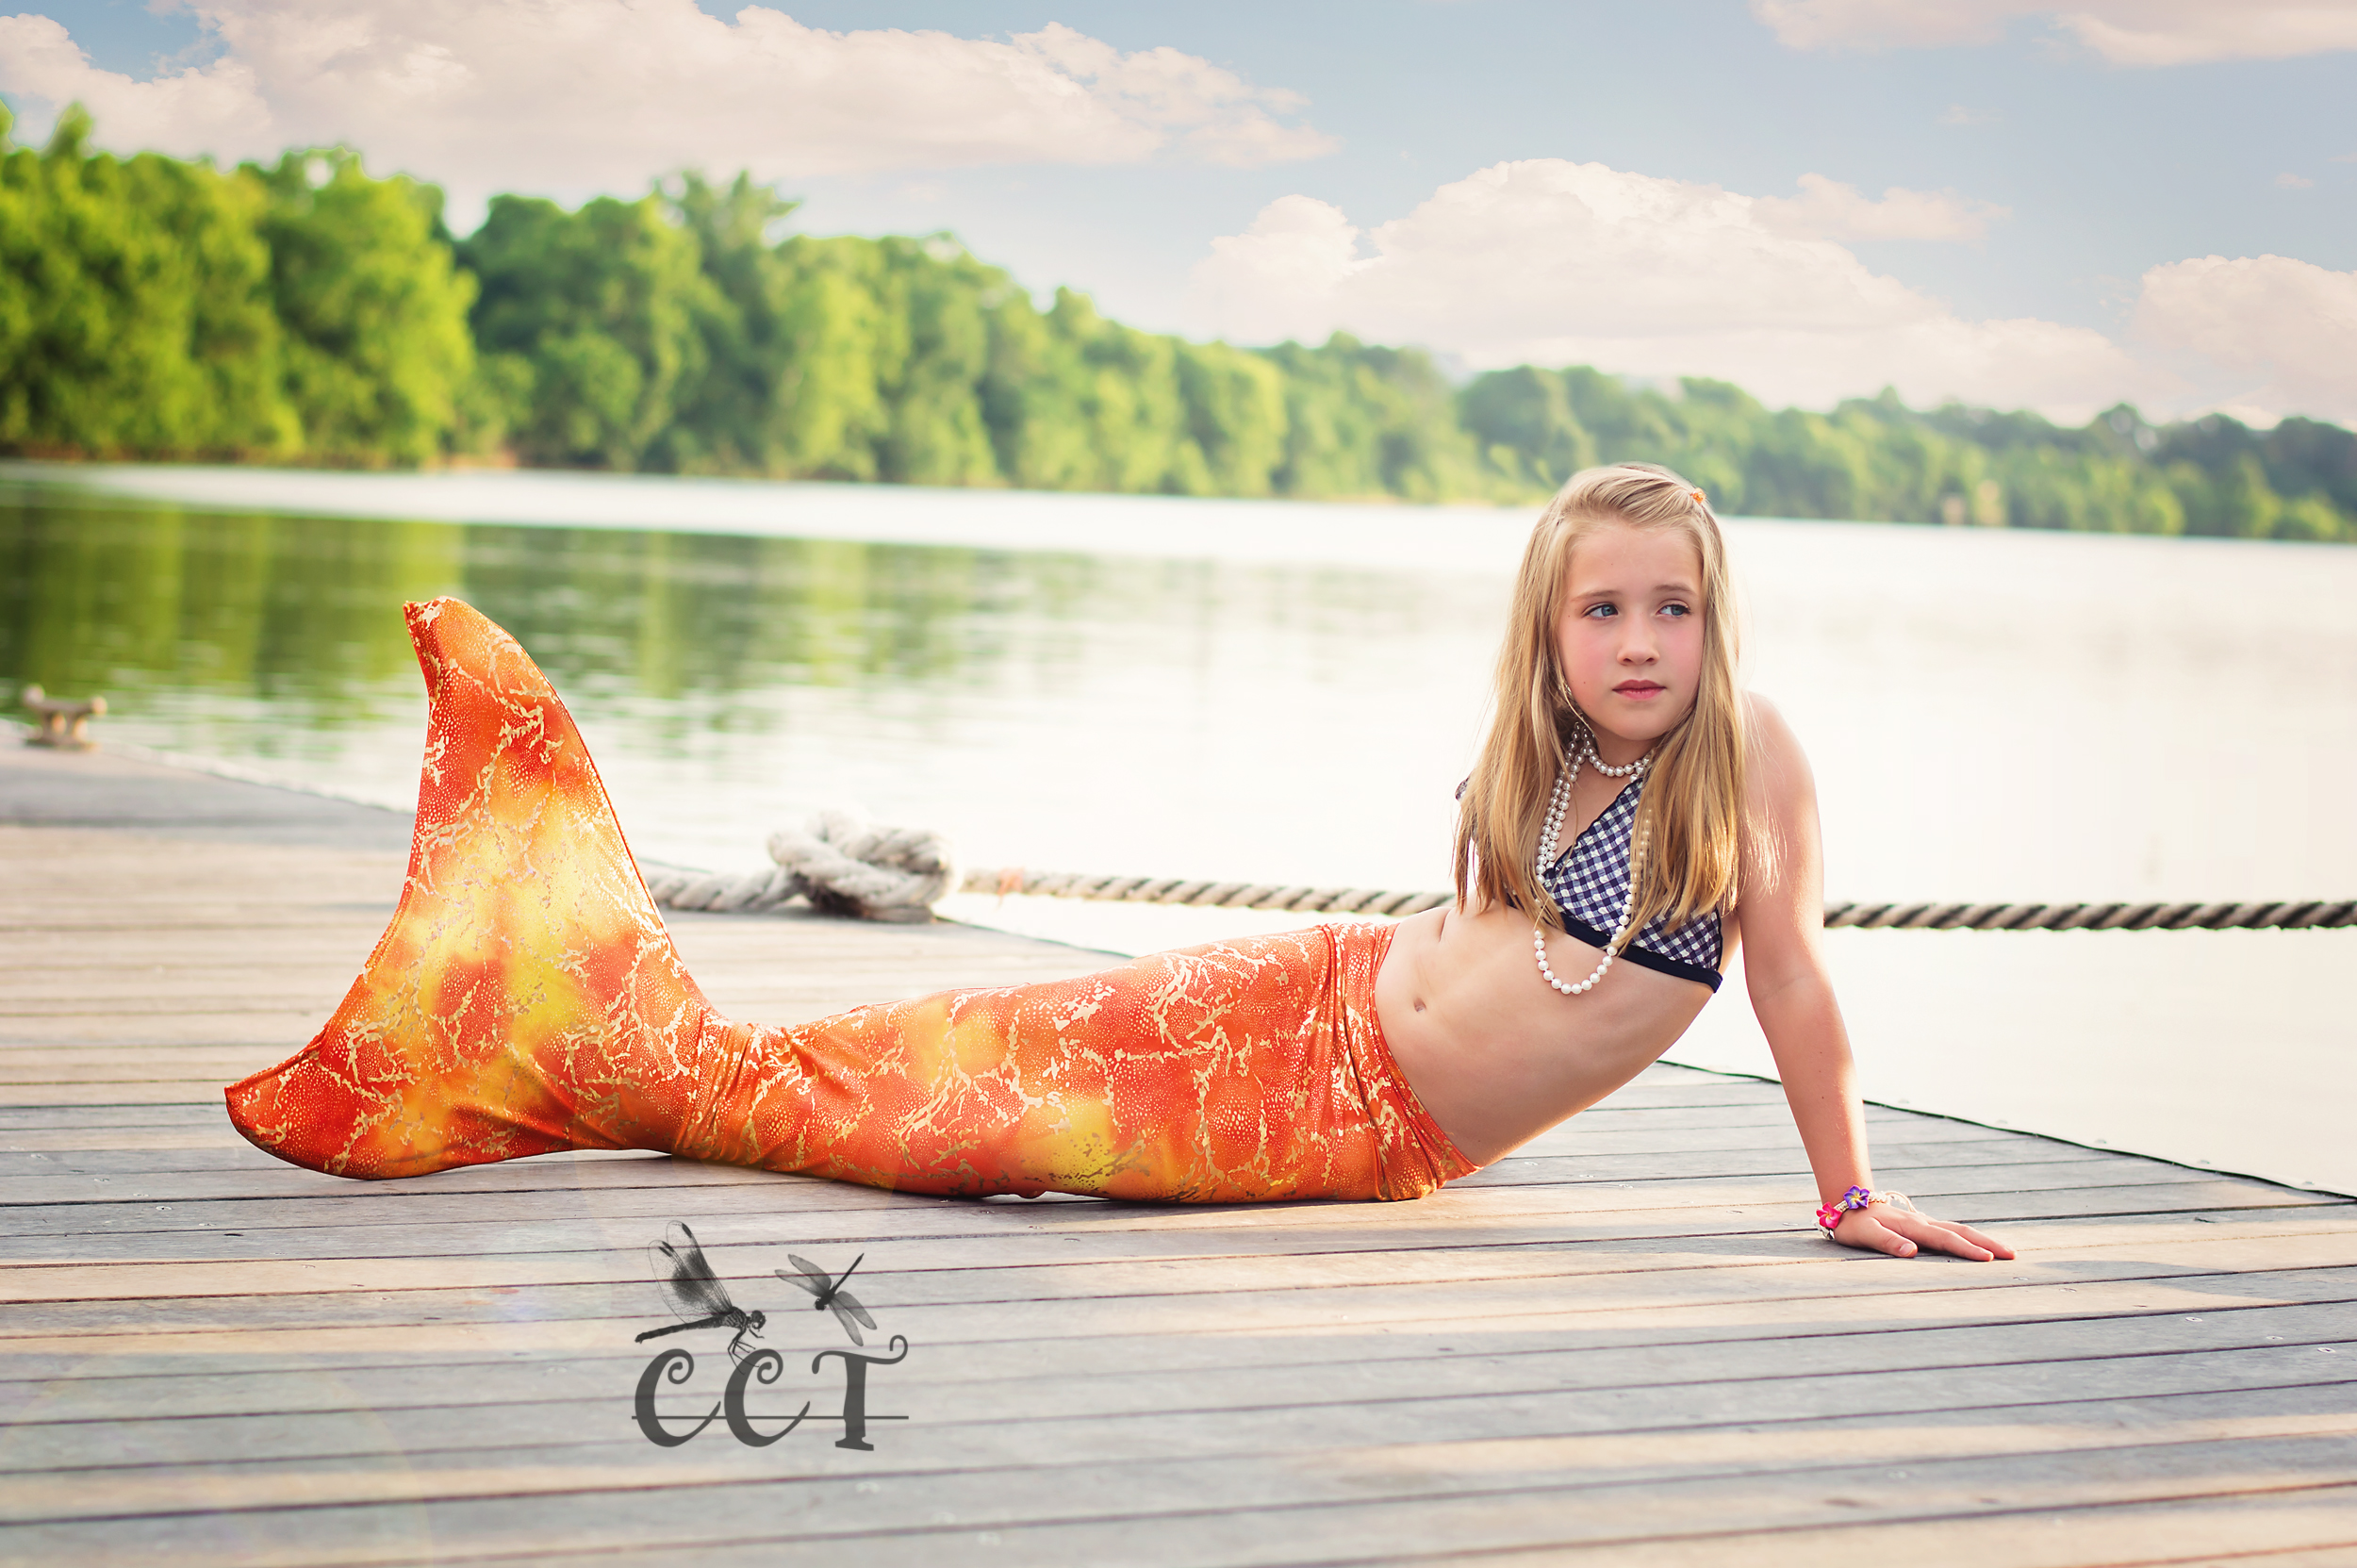 1wm Fun Summer Photo Shoot - The Mermaid Edit Blueprints Photoshop Actions Photoshop Tips